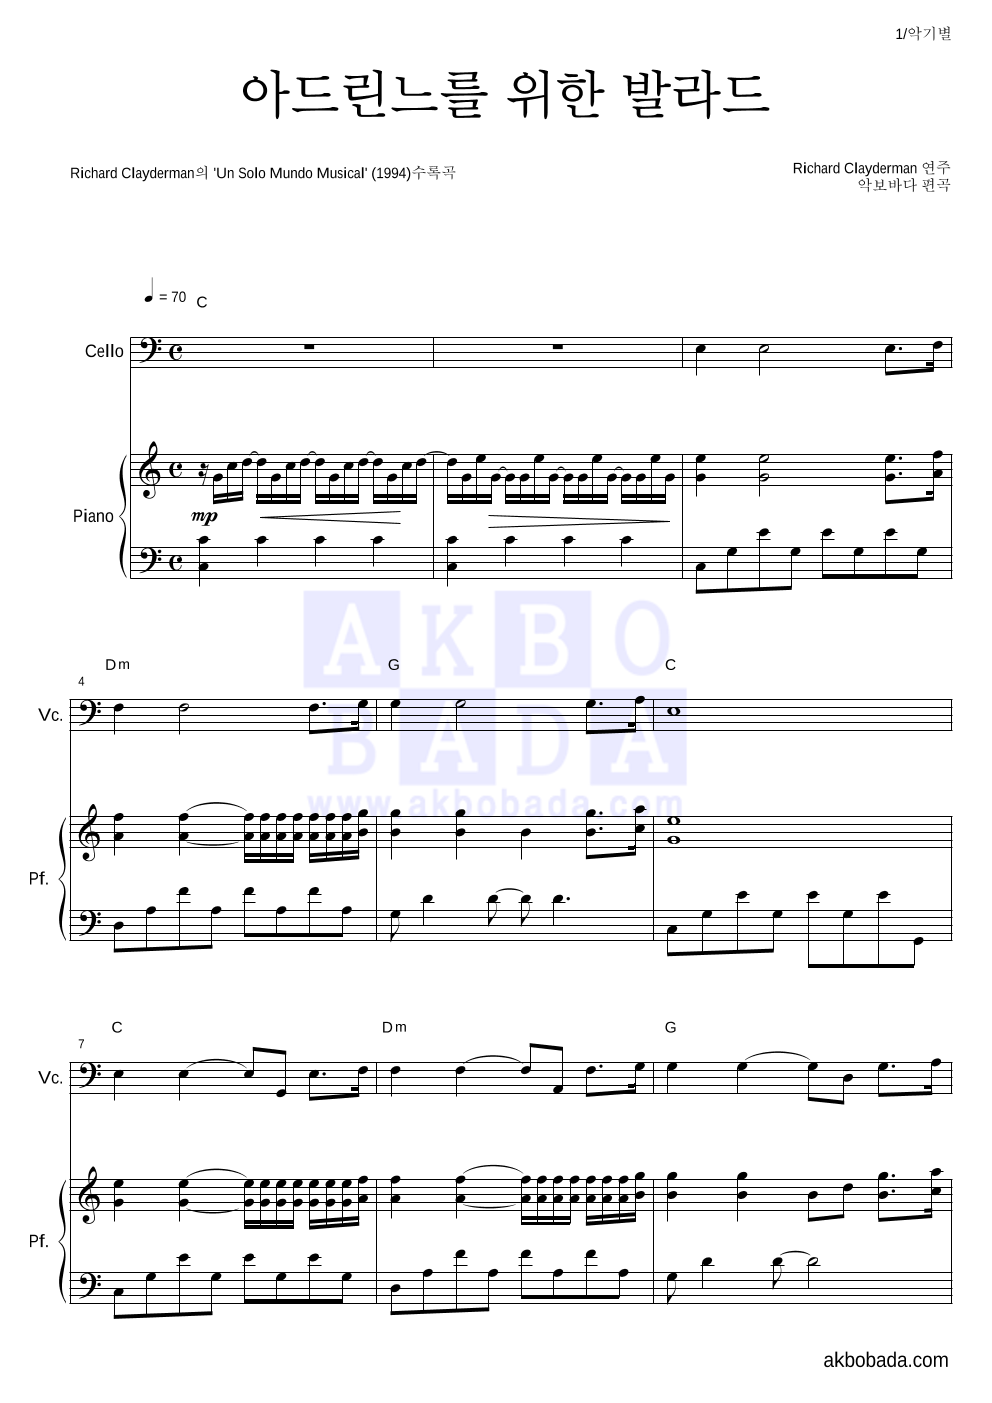 Richard Clayderman  - 아드린느를 위한 발라드 첼로&피아노 악보 